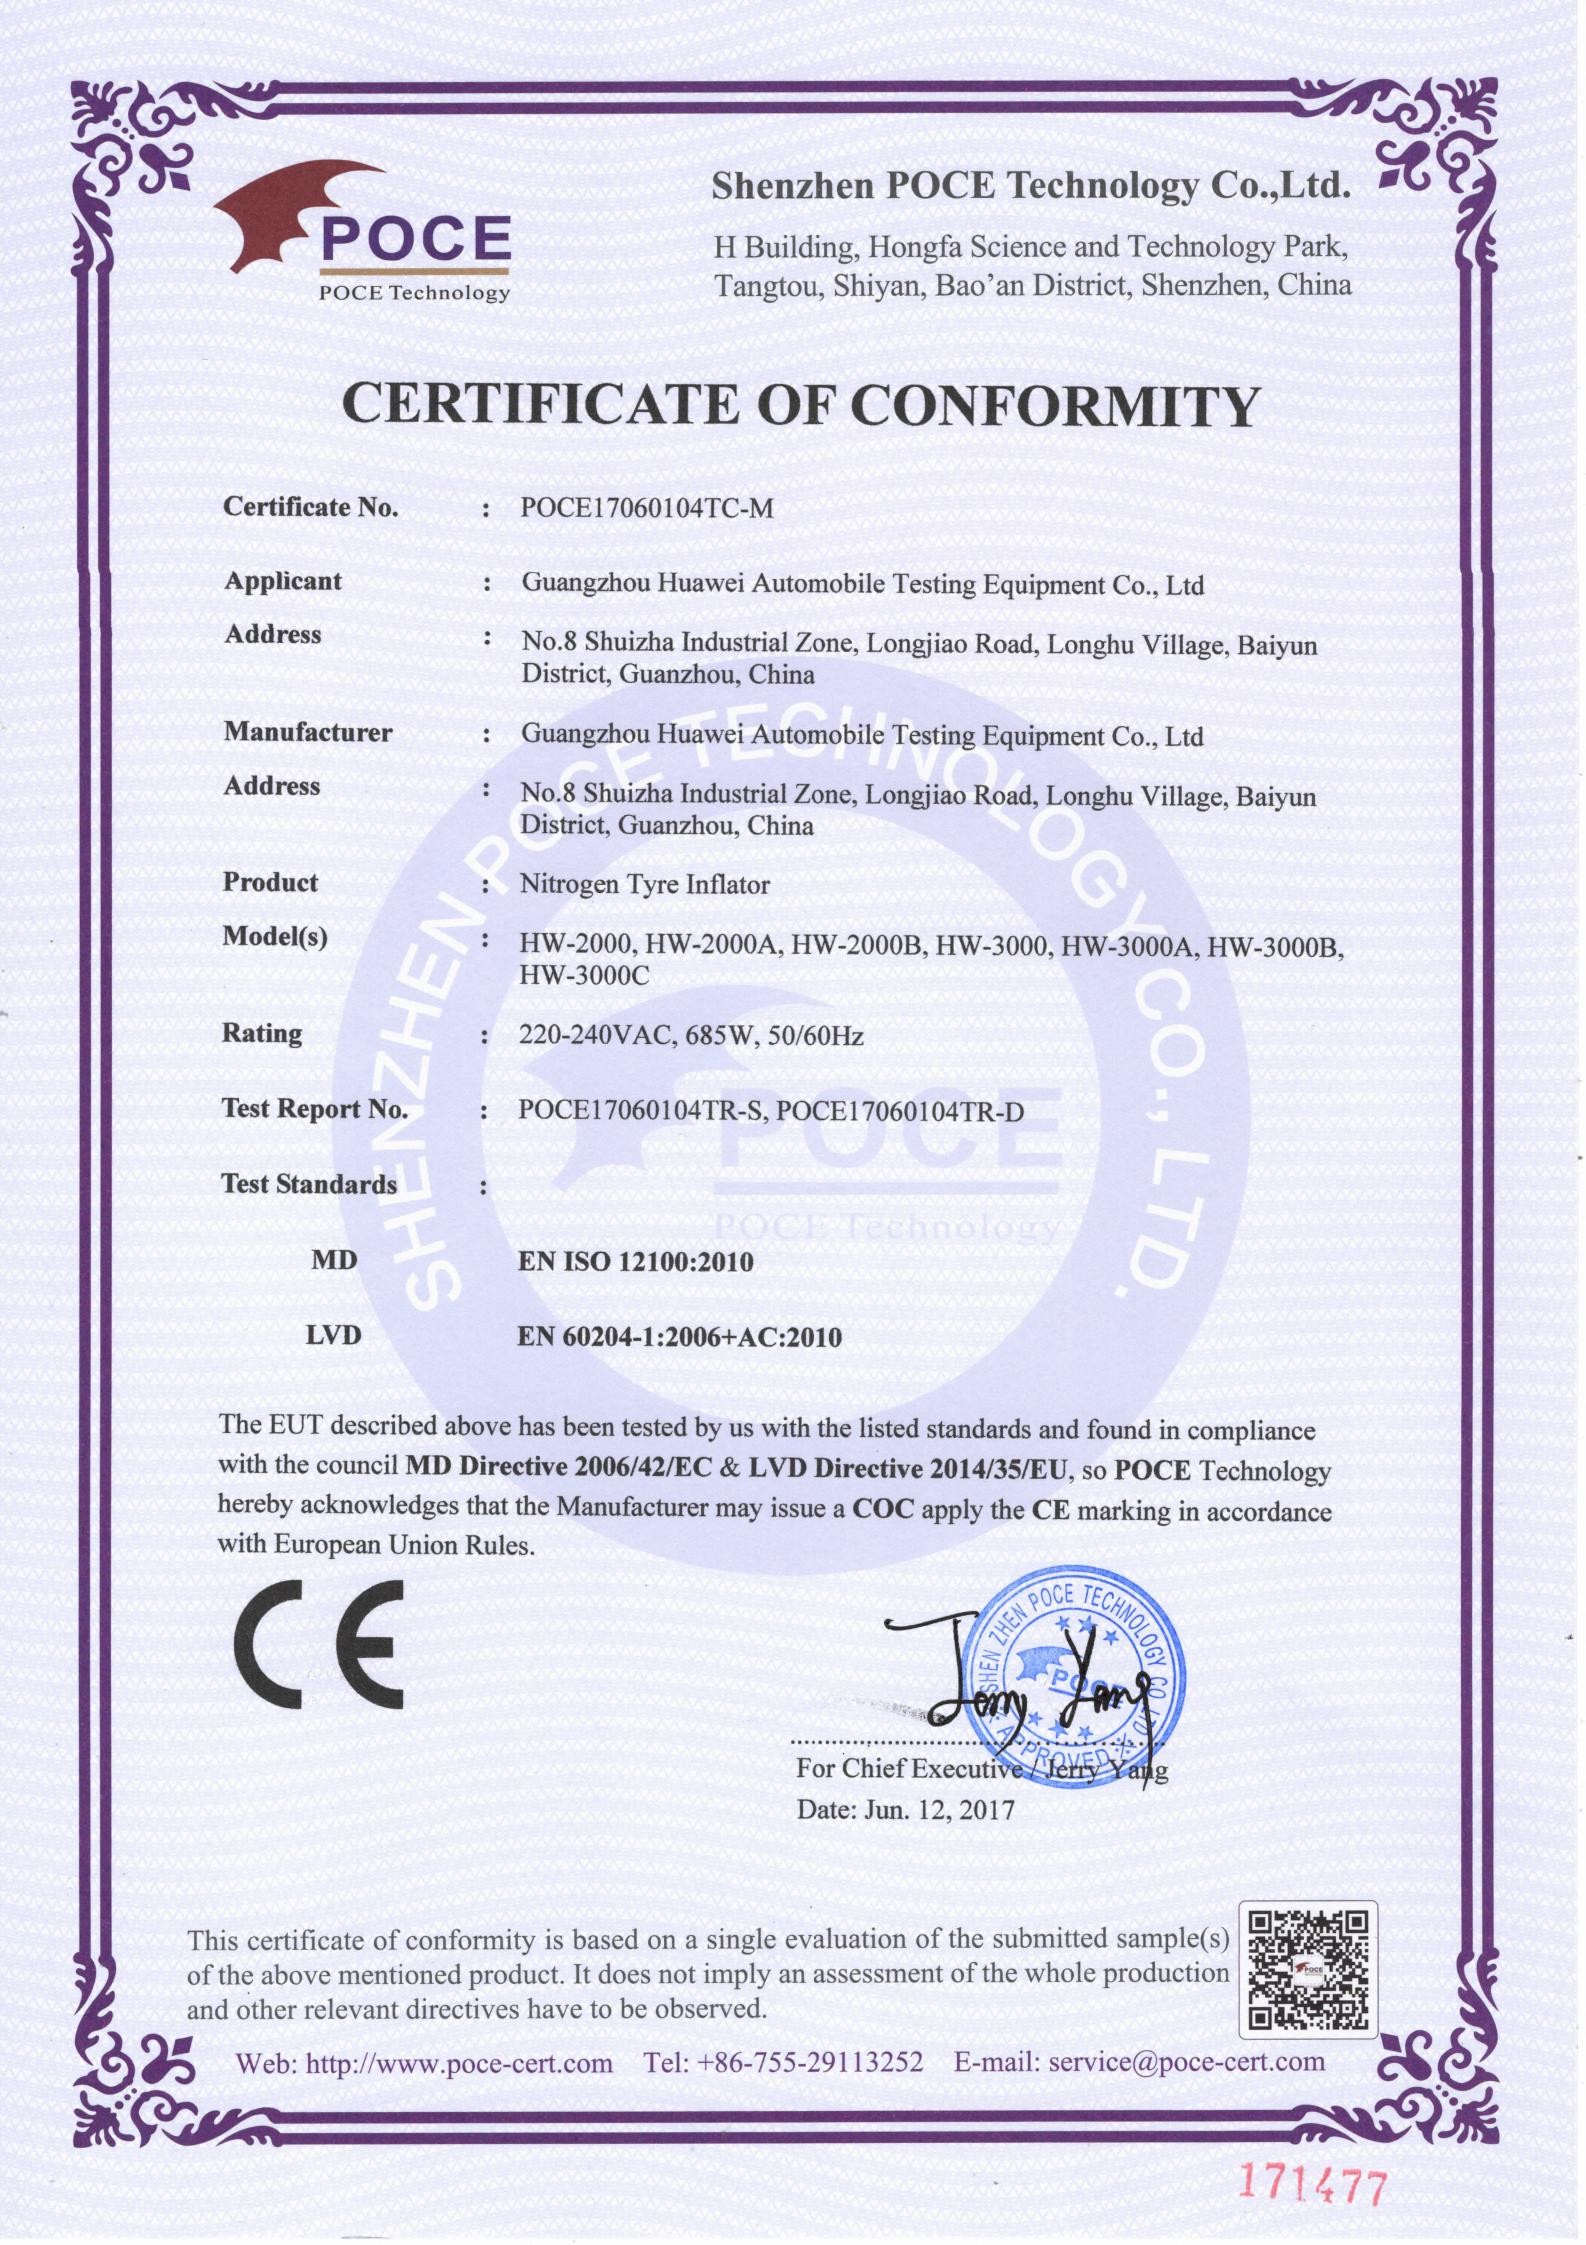 Huawei Automobile Testing Equipment Co., Ltd. Certifications